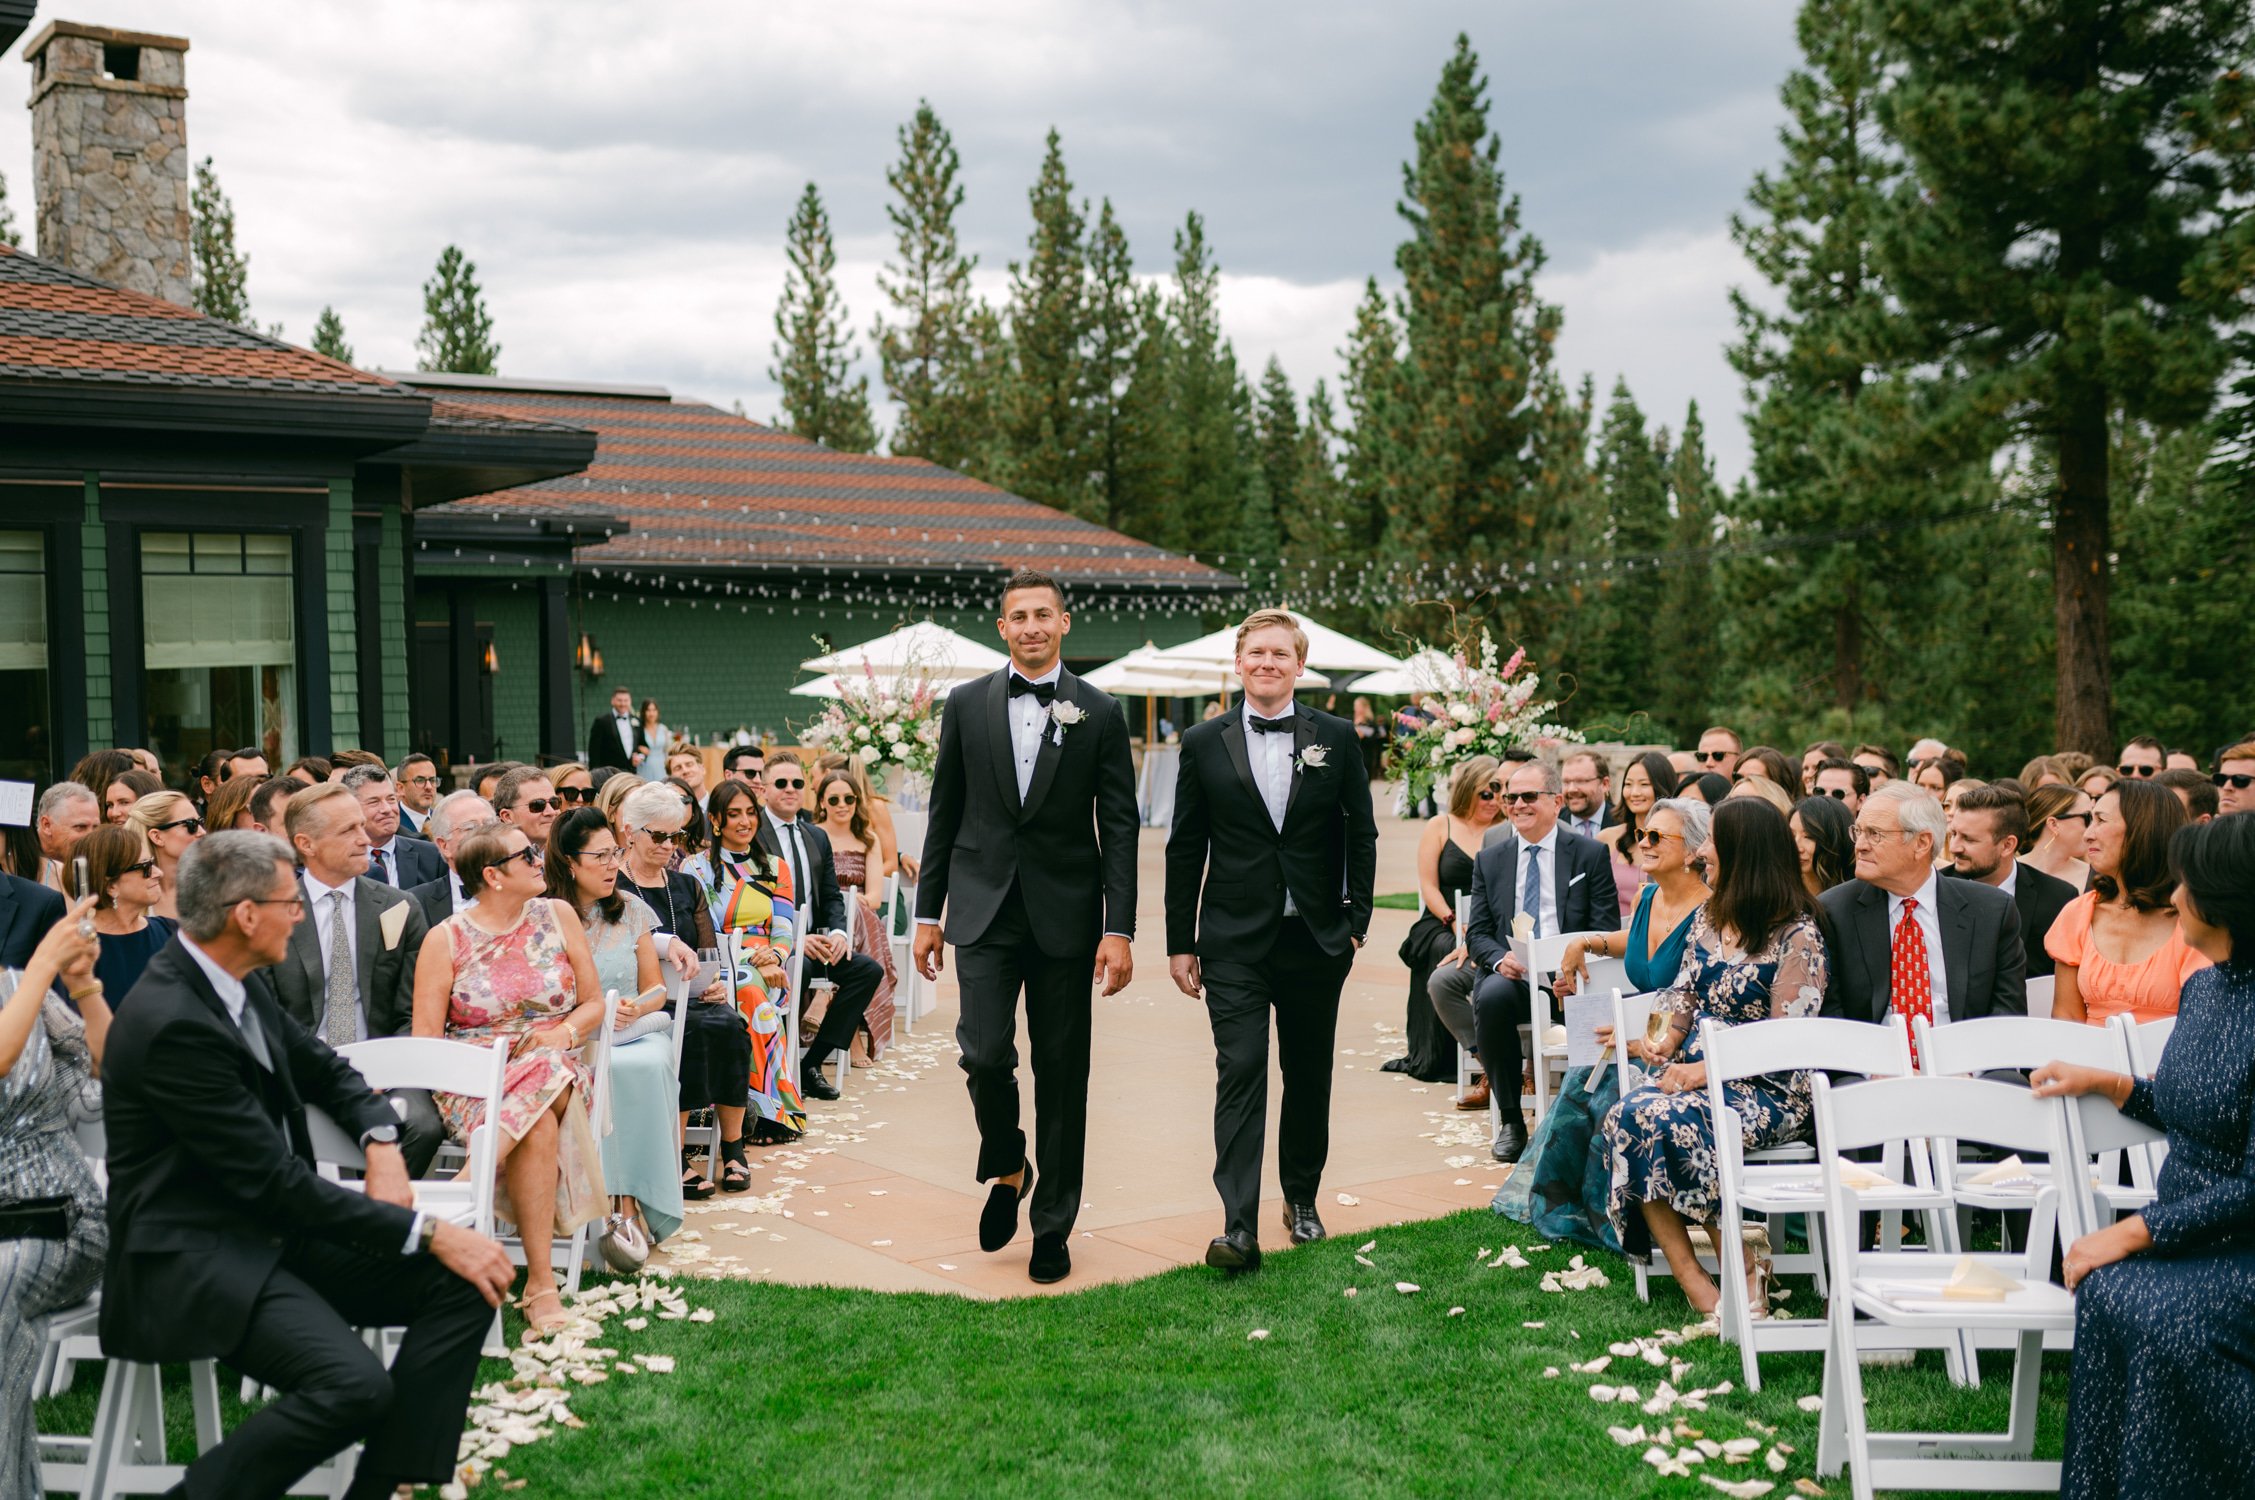 Martis Camp Wedding, photo of the groomsmen walking down the aisle